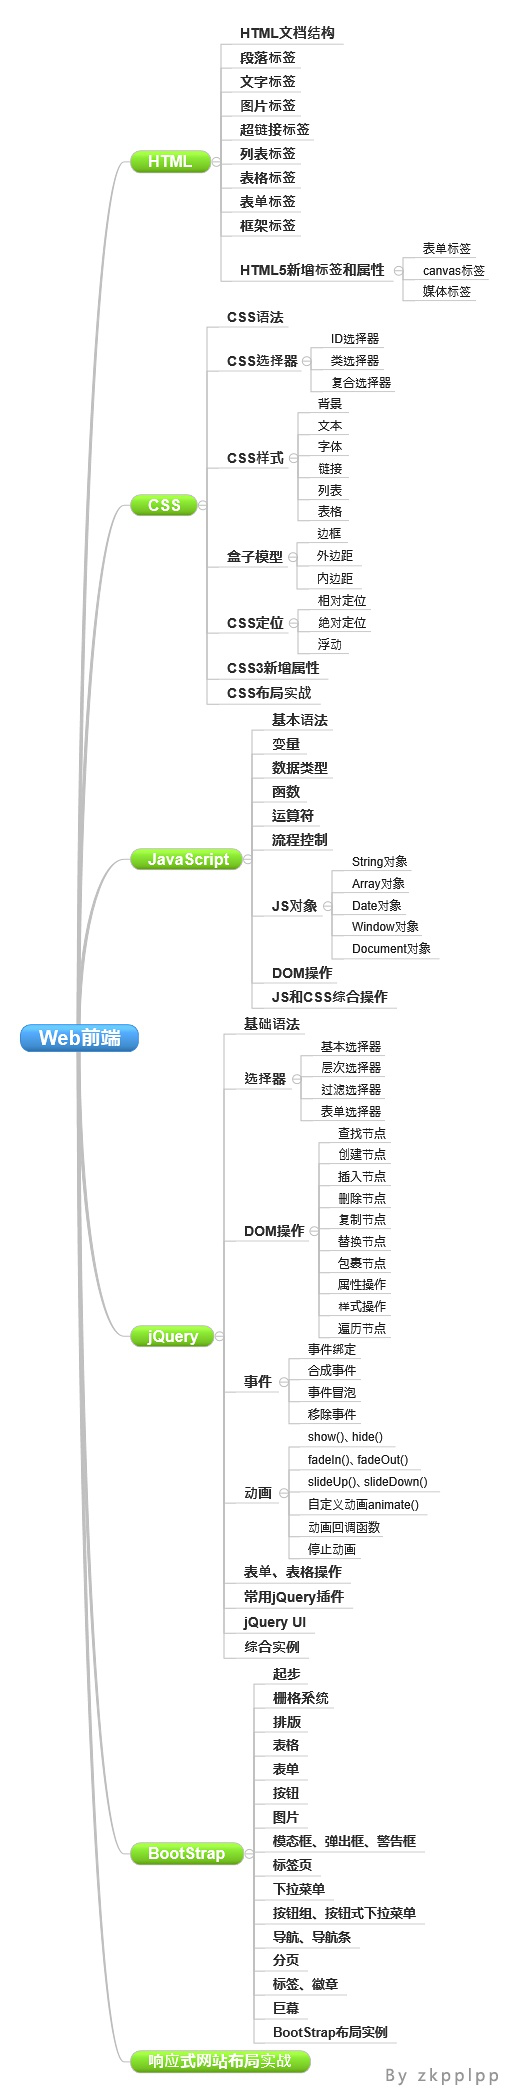 QzhouZ的前端开发知识图谱